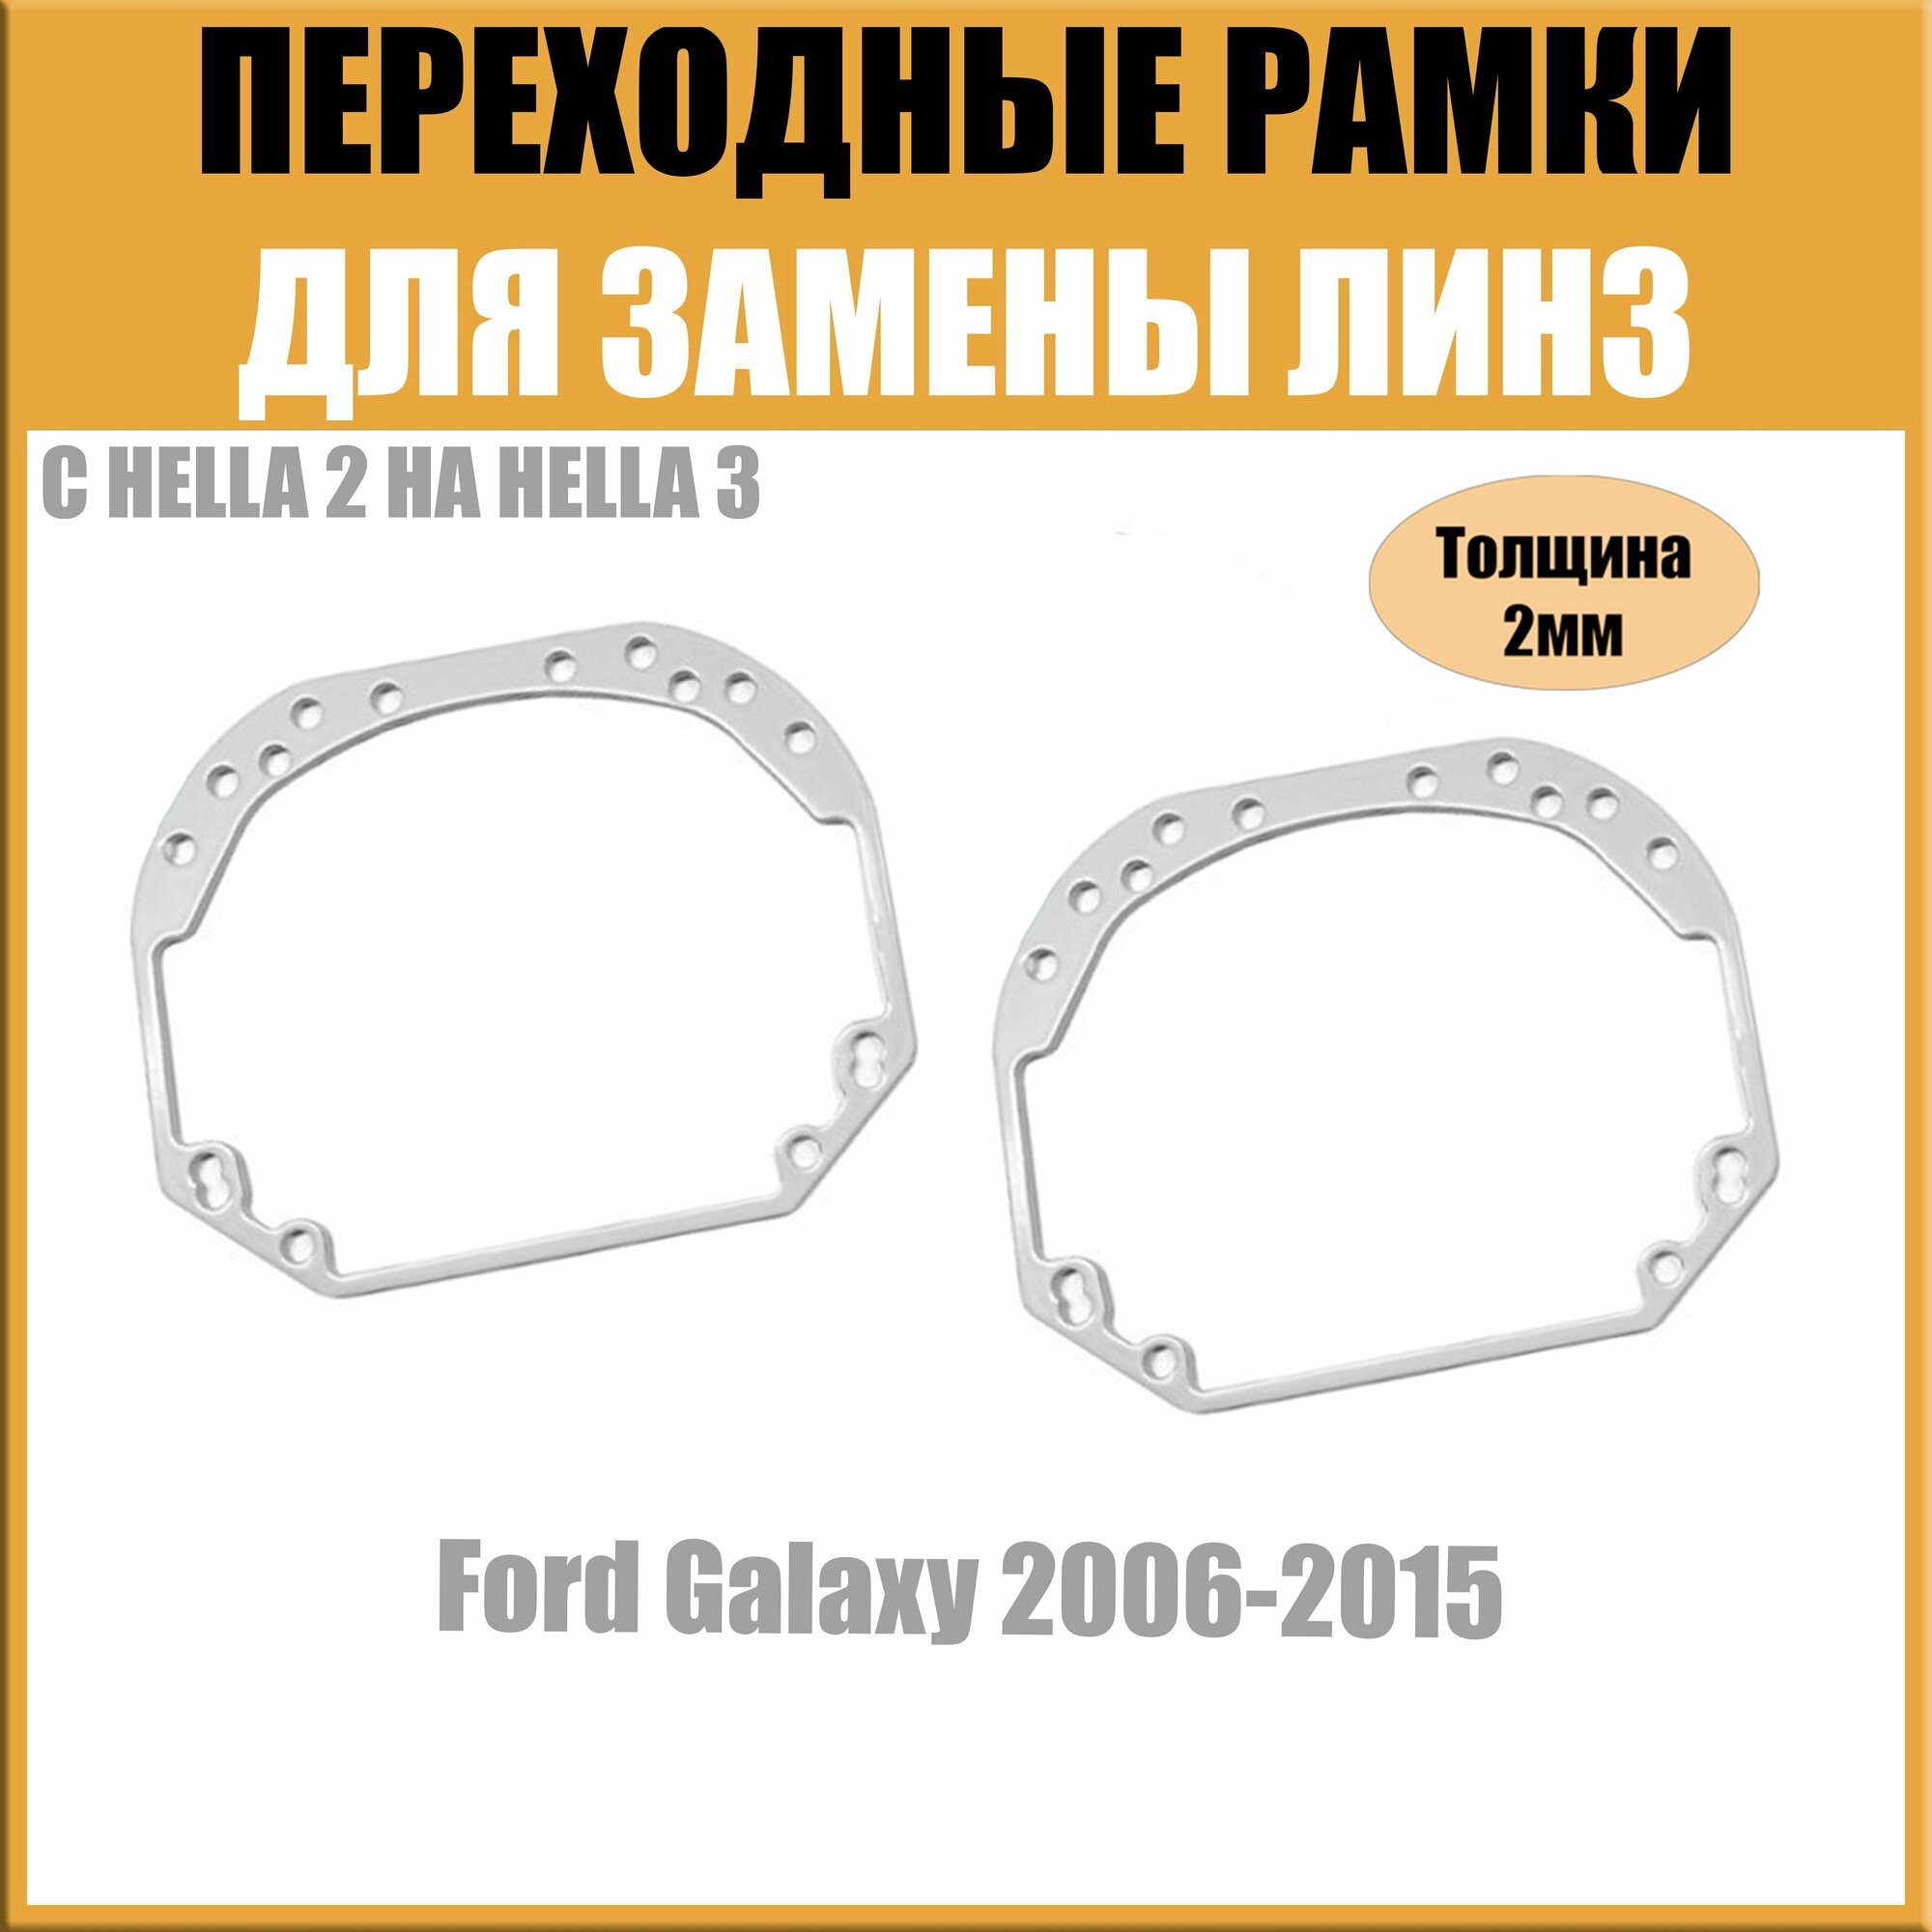 Переходные рамки для линз №1 на Ford Galaxy 2006-2015 под модуль Hella 3R/Hella 3 (Комплект 2шт)